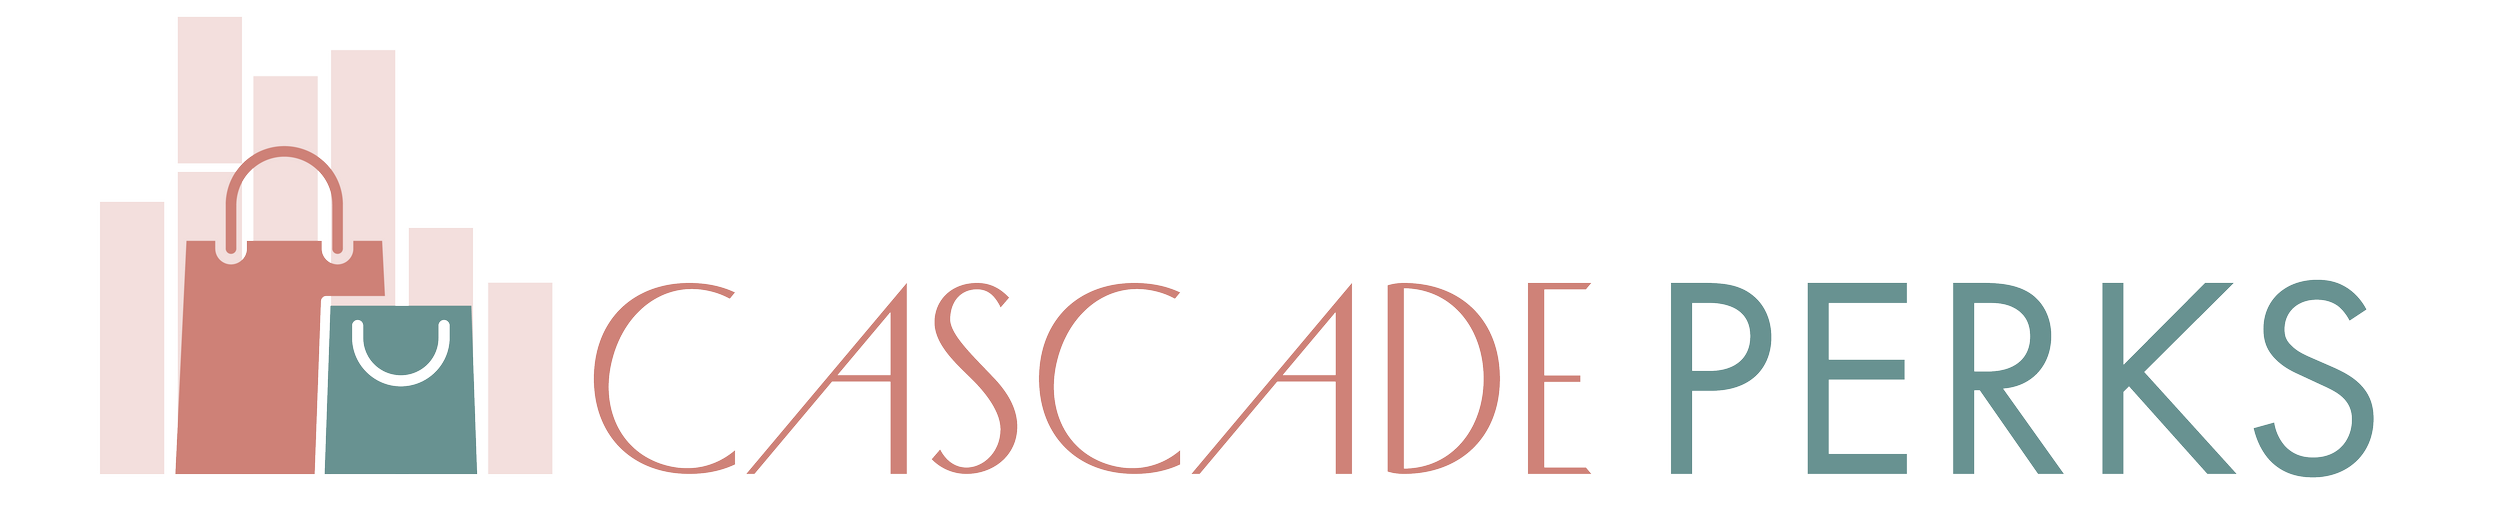 Cascade Perks Logo